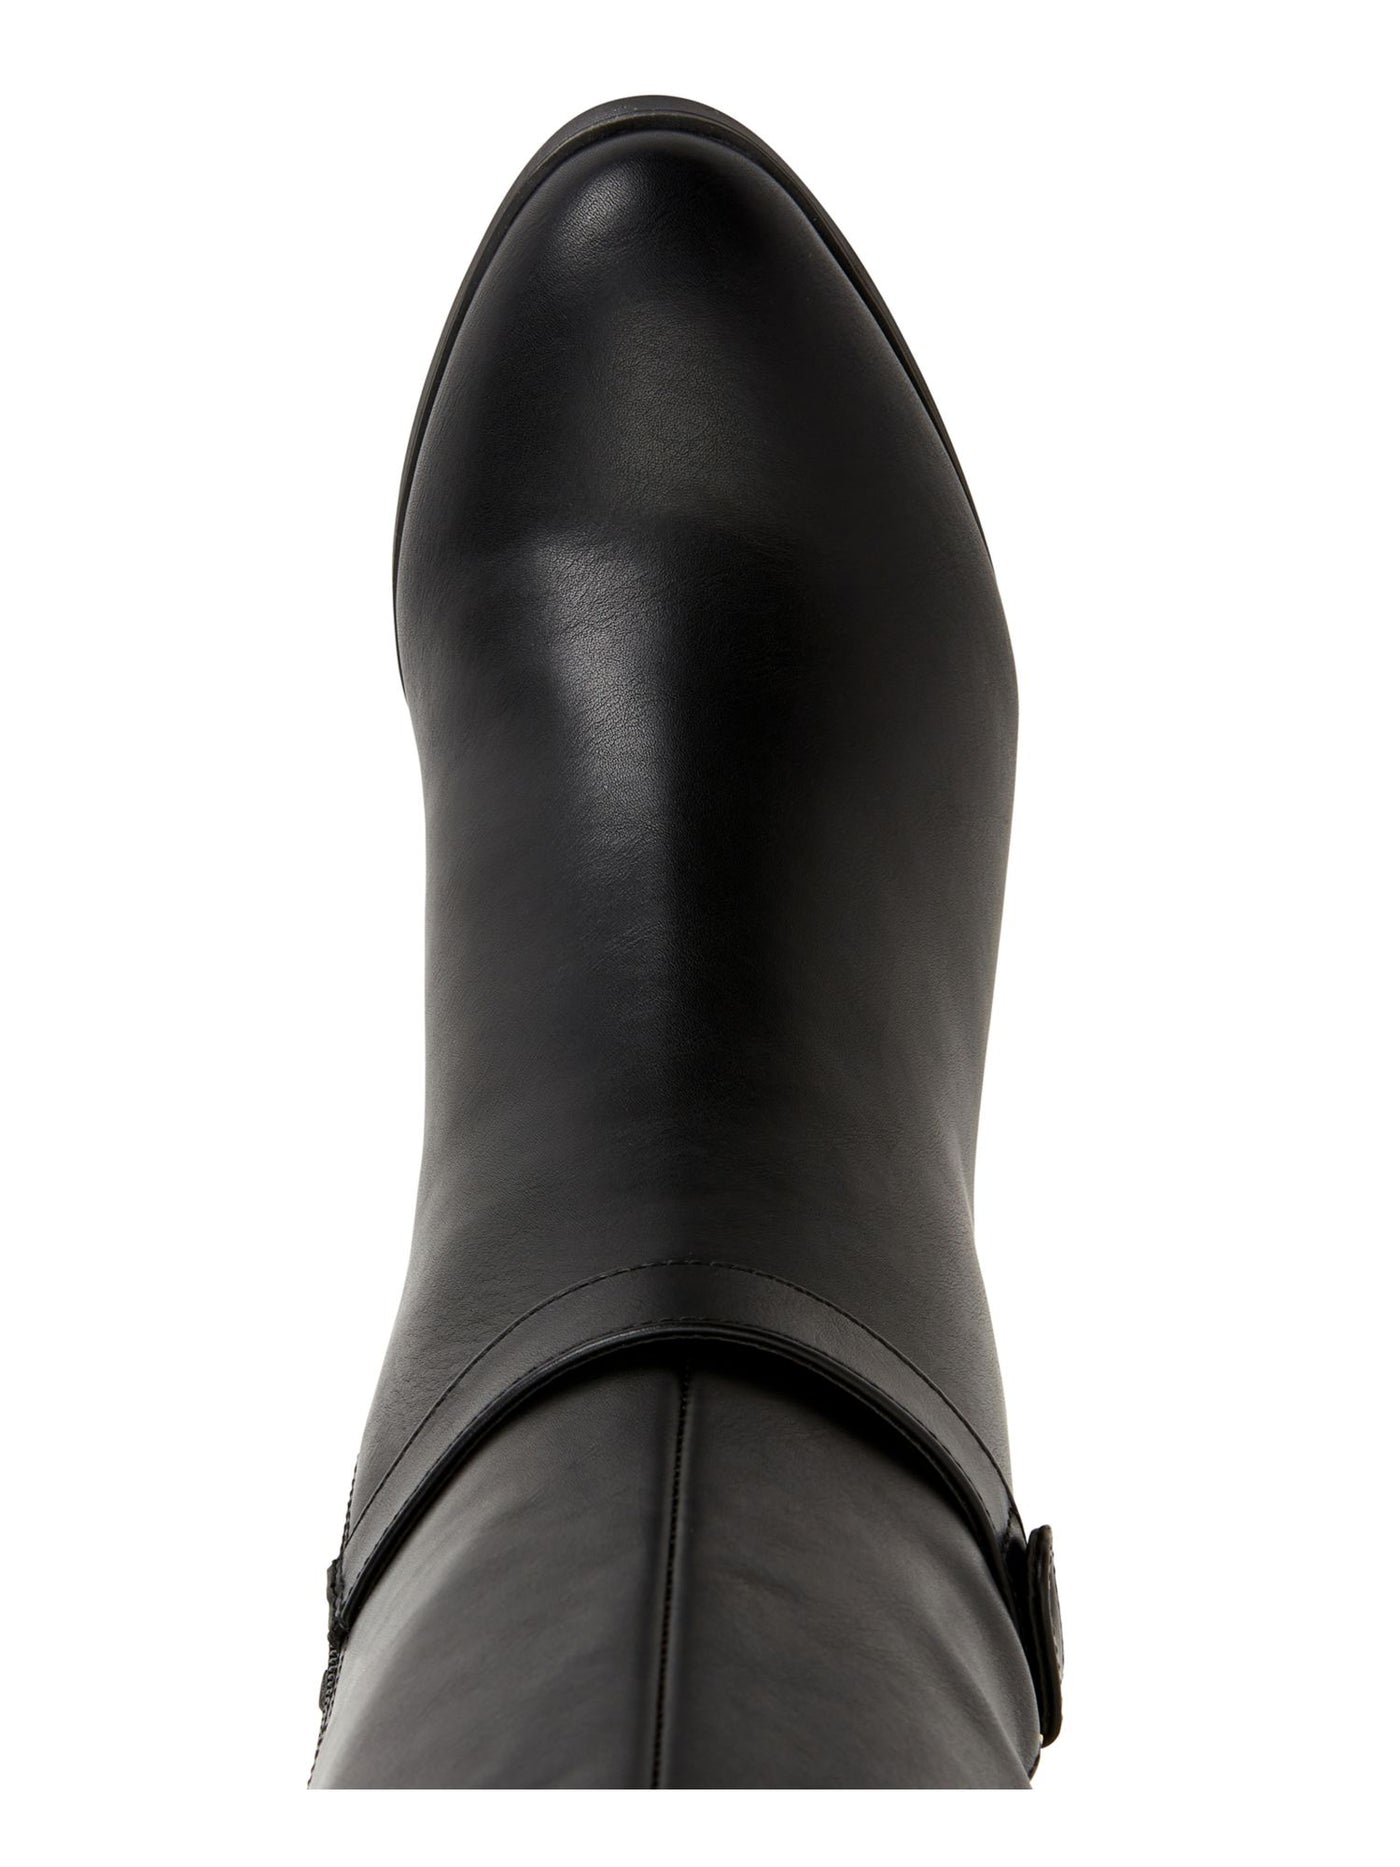 CHARTER CLUB Womens Black Buckle Accent Block Heel Zip-Up Heeled Boots 10 M